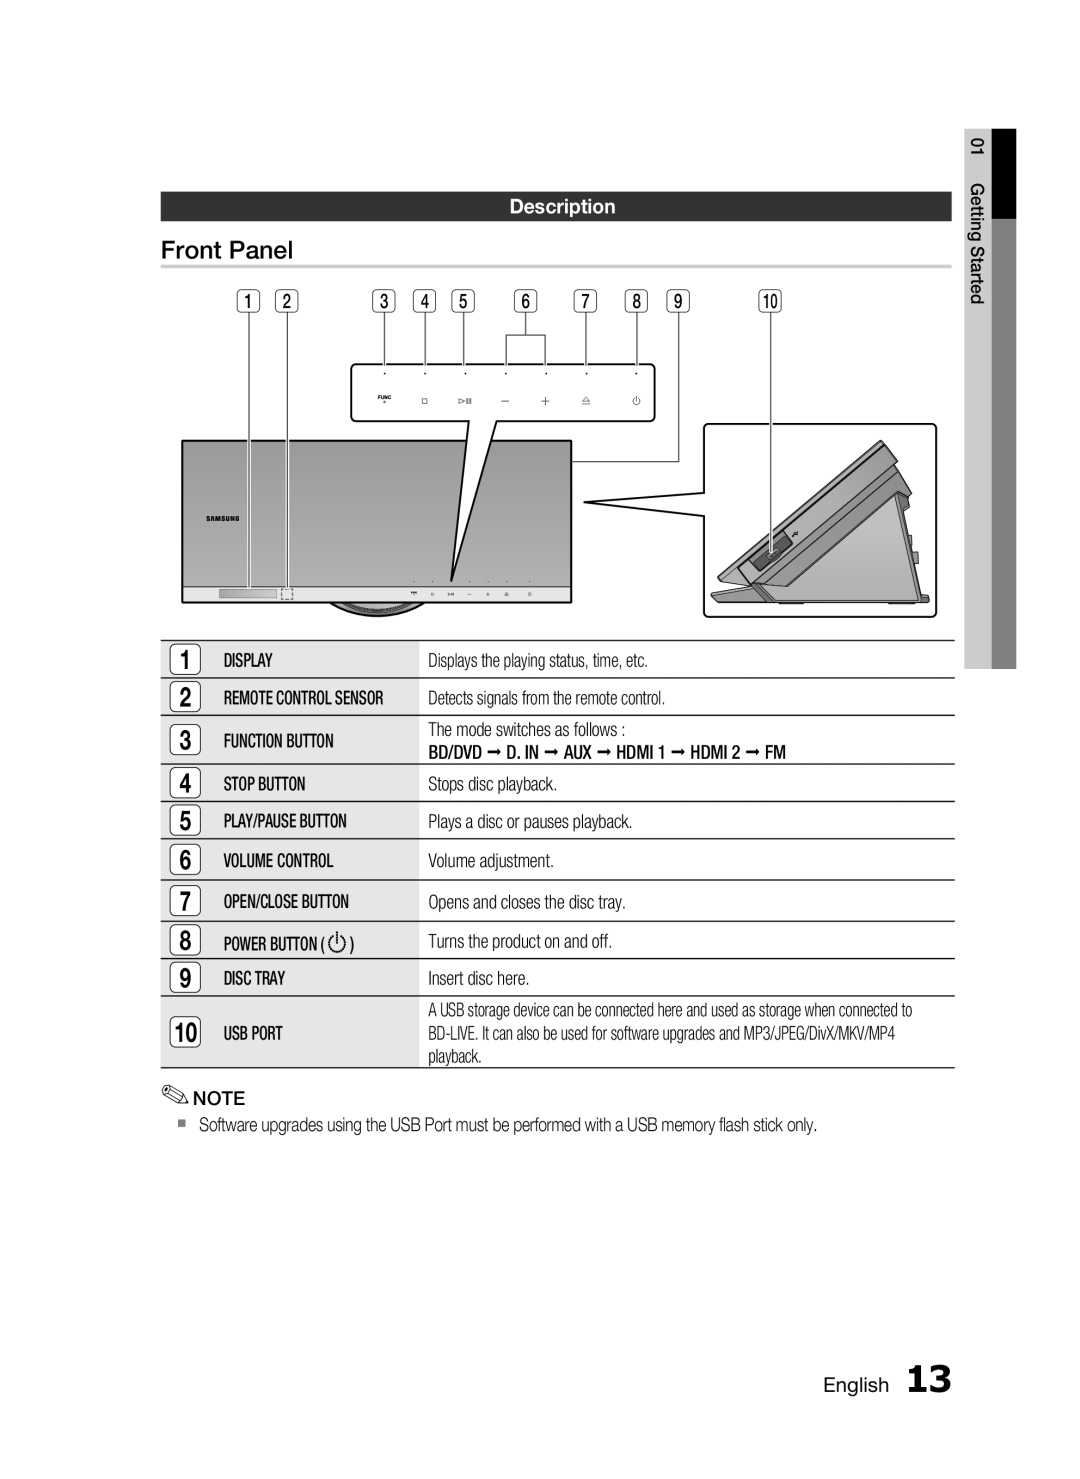 Samsung HT-C7300/XEN, HT-C7300/EDC, HT-C7300/XEF manual Front Panel, Description, English 